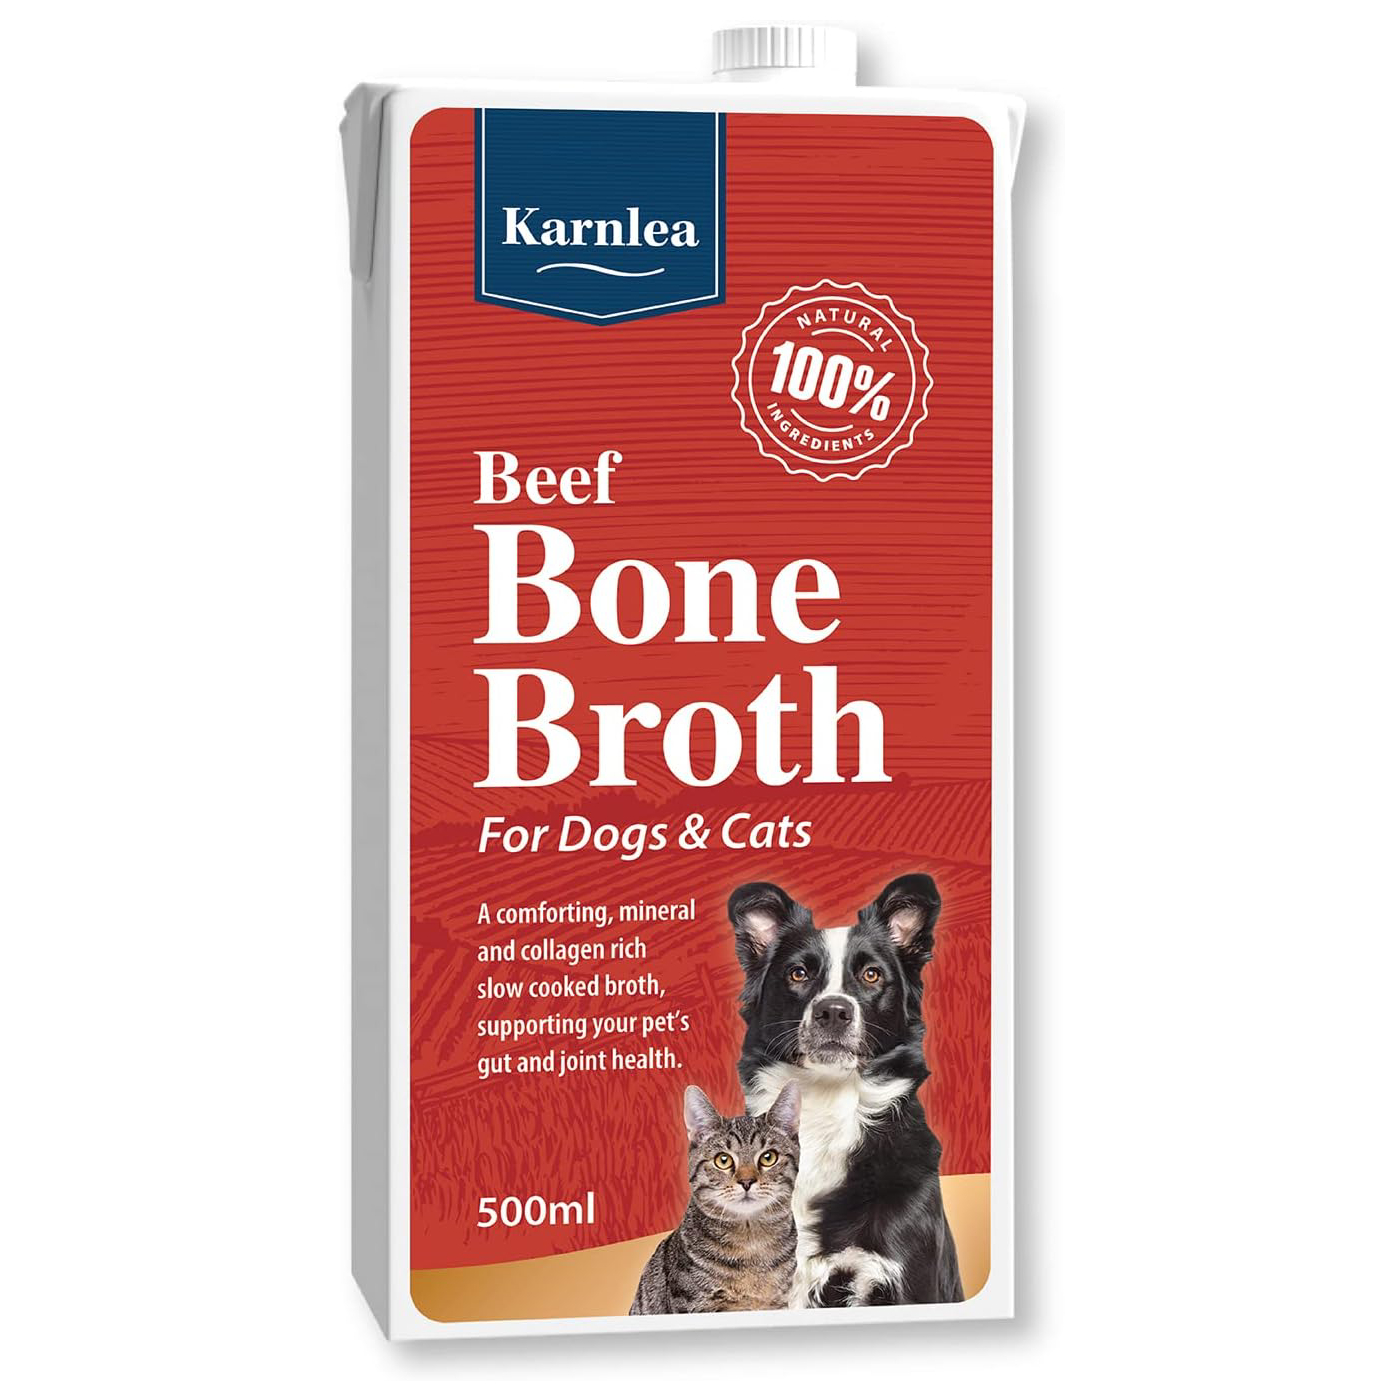 KARNLEA Beef Bone Broth for Dogs